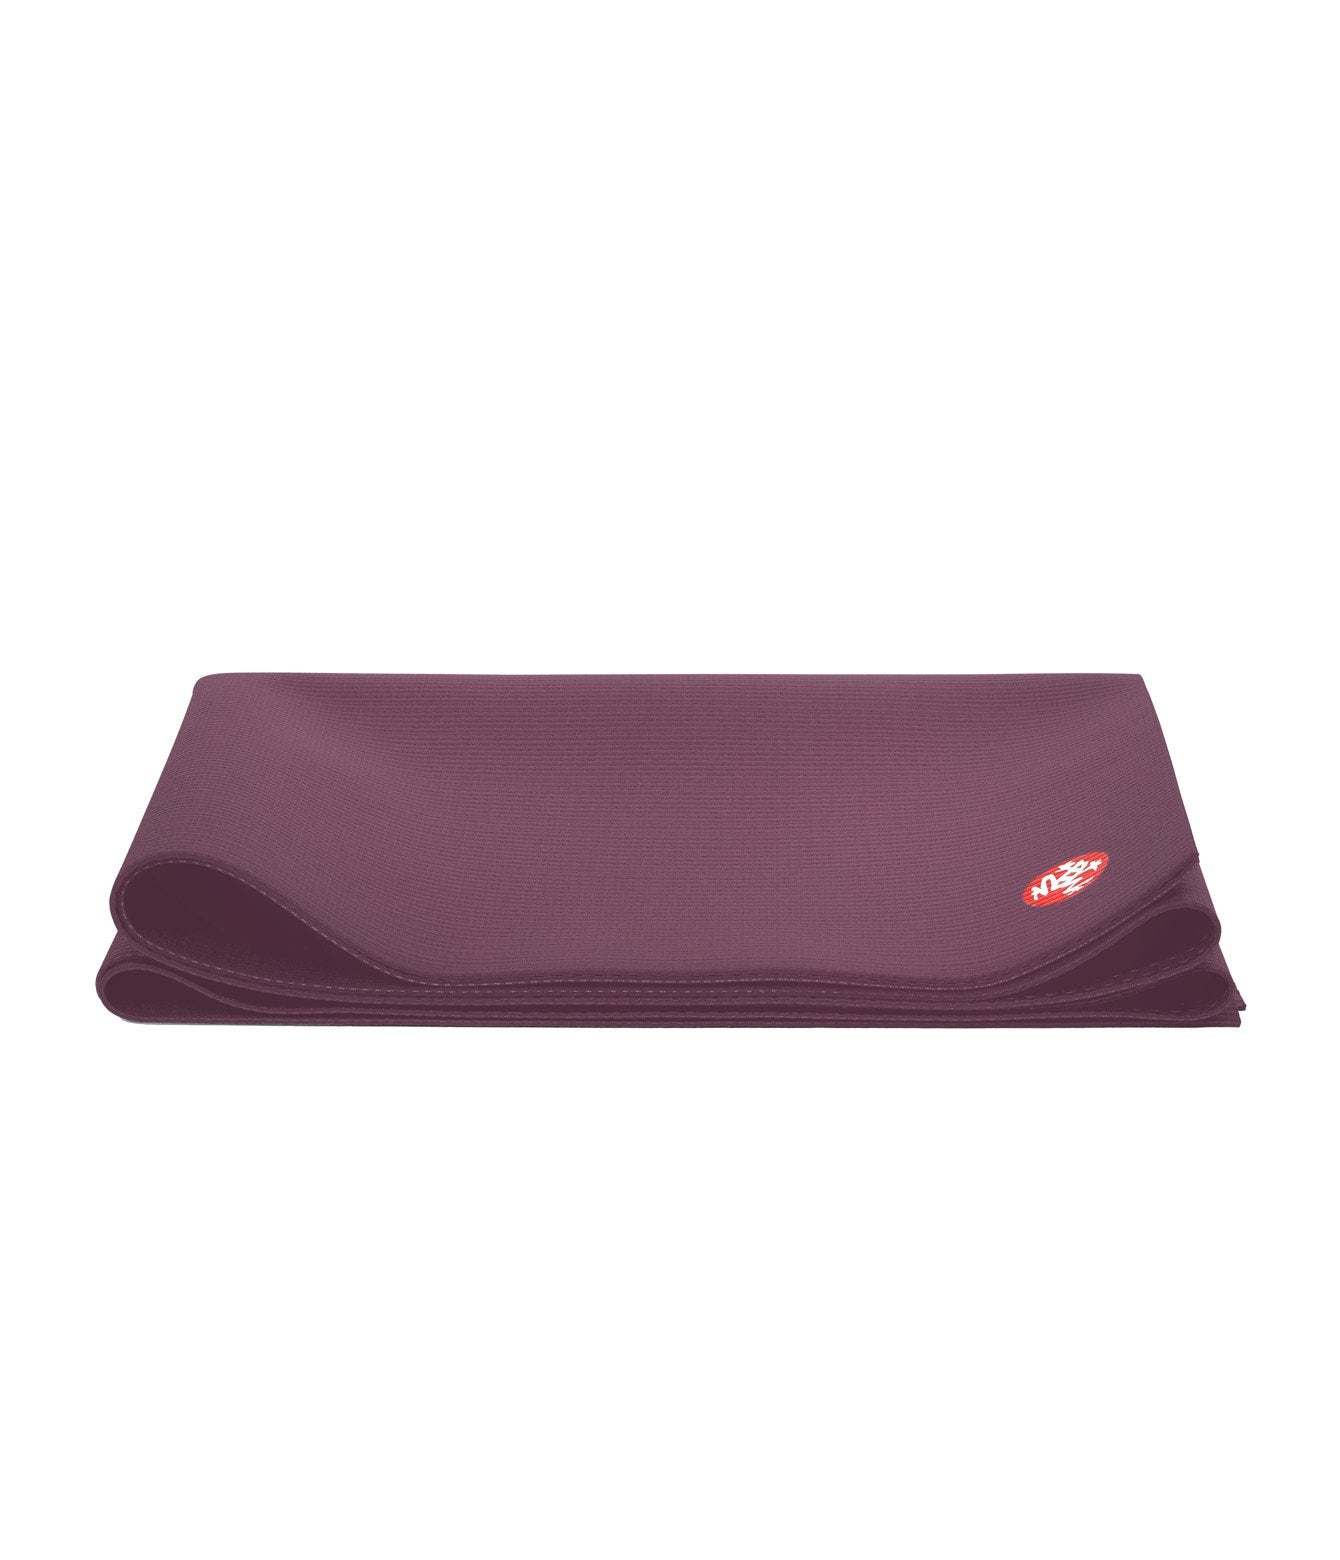 NWT Manduka - PRO Travel Yoga Mat, 71x24x2.5mm MULTIPLE COLORS